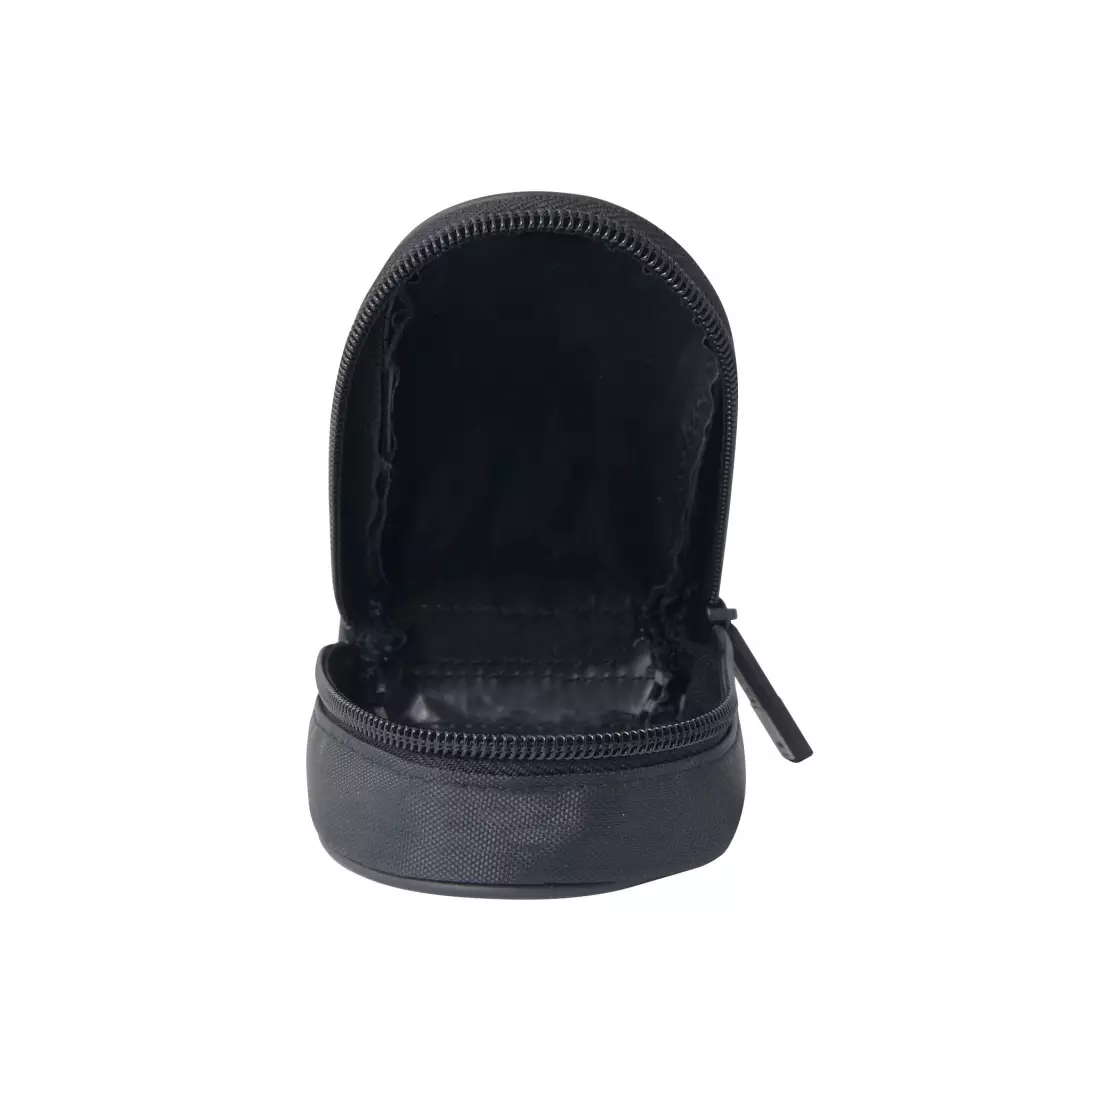 FORCE MINILIGHT velcro saddle bag, black 896091